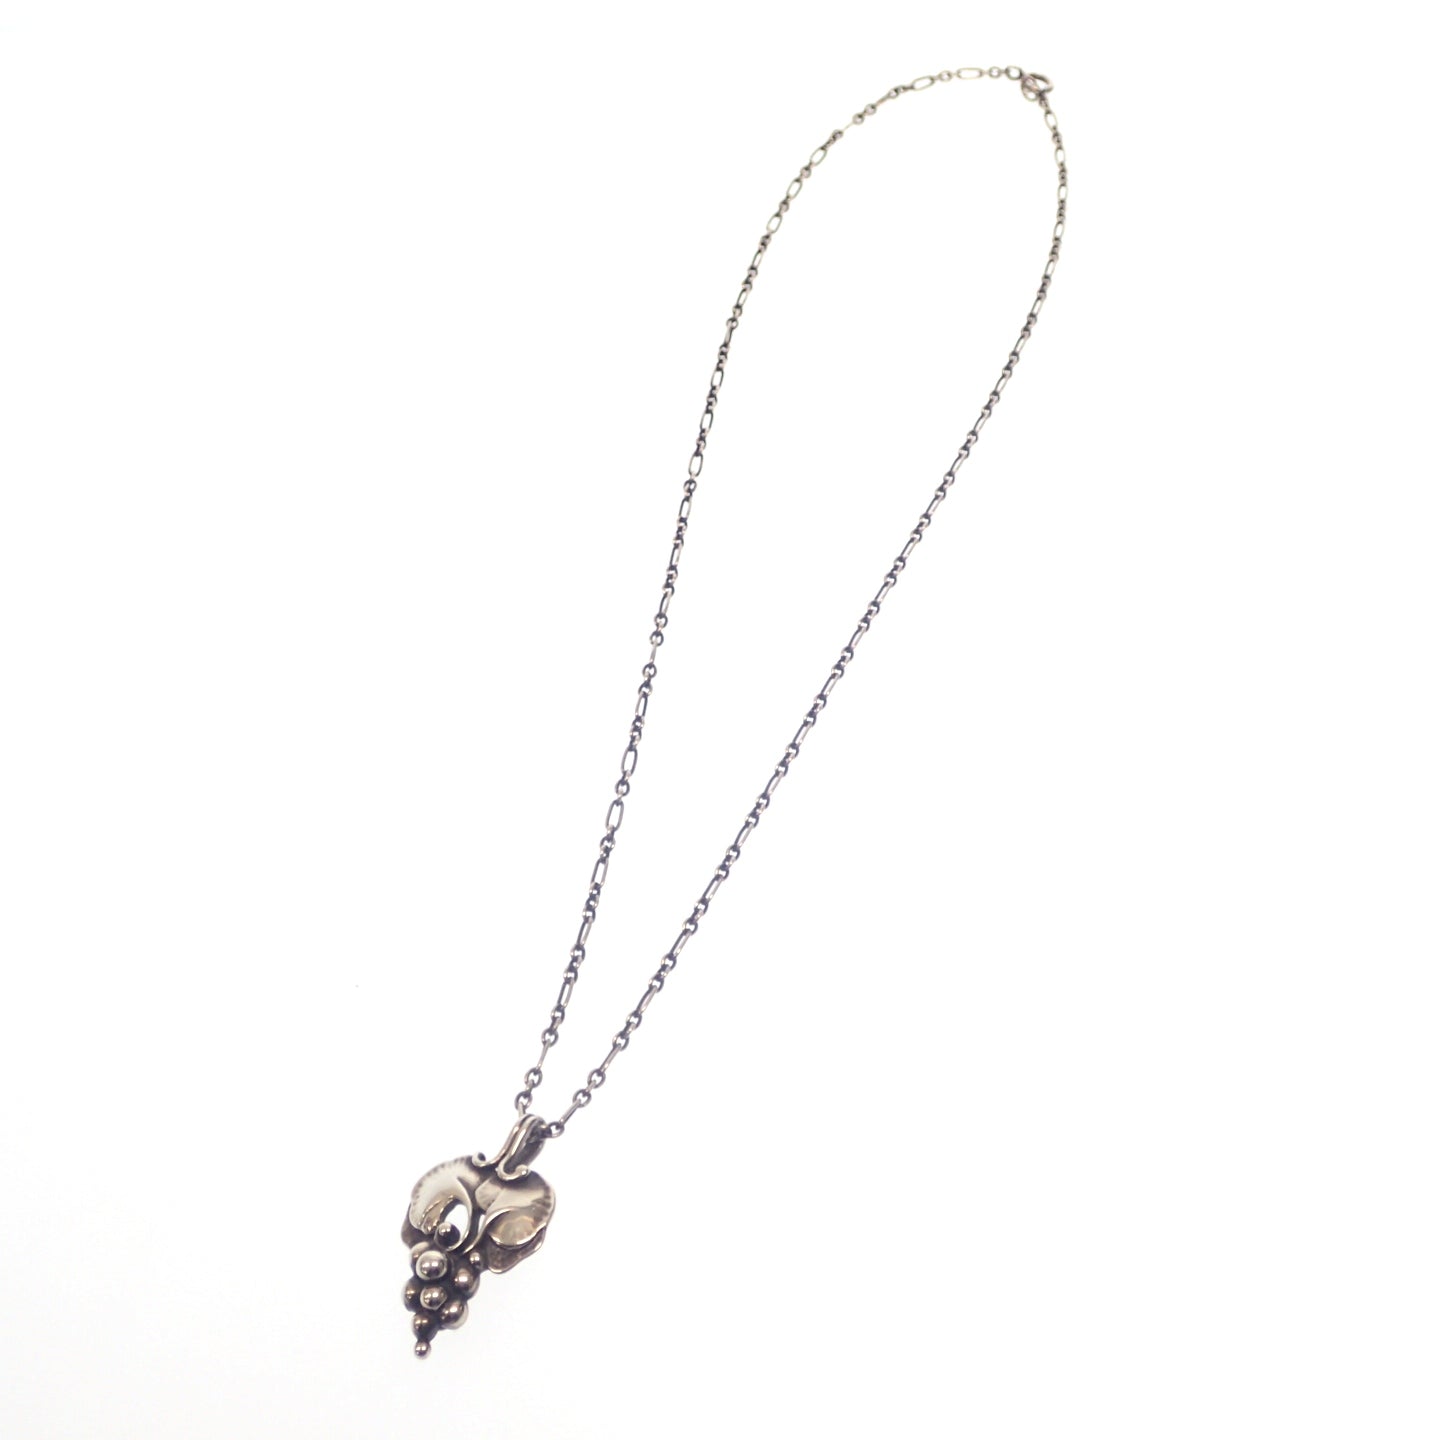 Good condition ◆ Georg Jensen necklace pendant grape SV925 silver GEORG JENSEN [AFI16] 